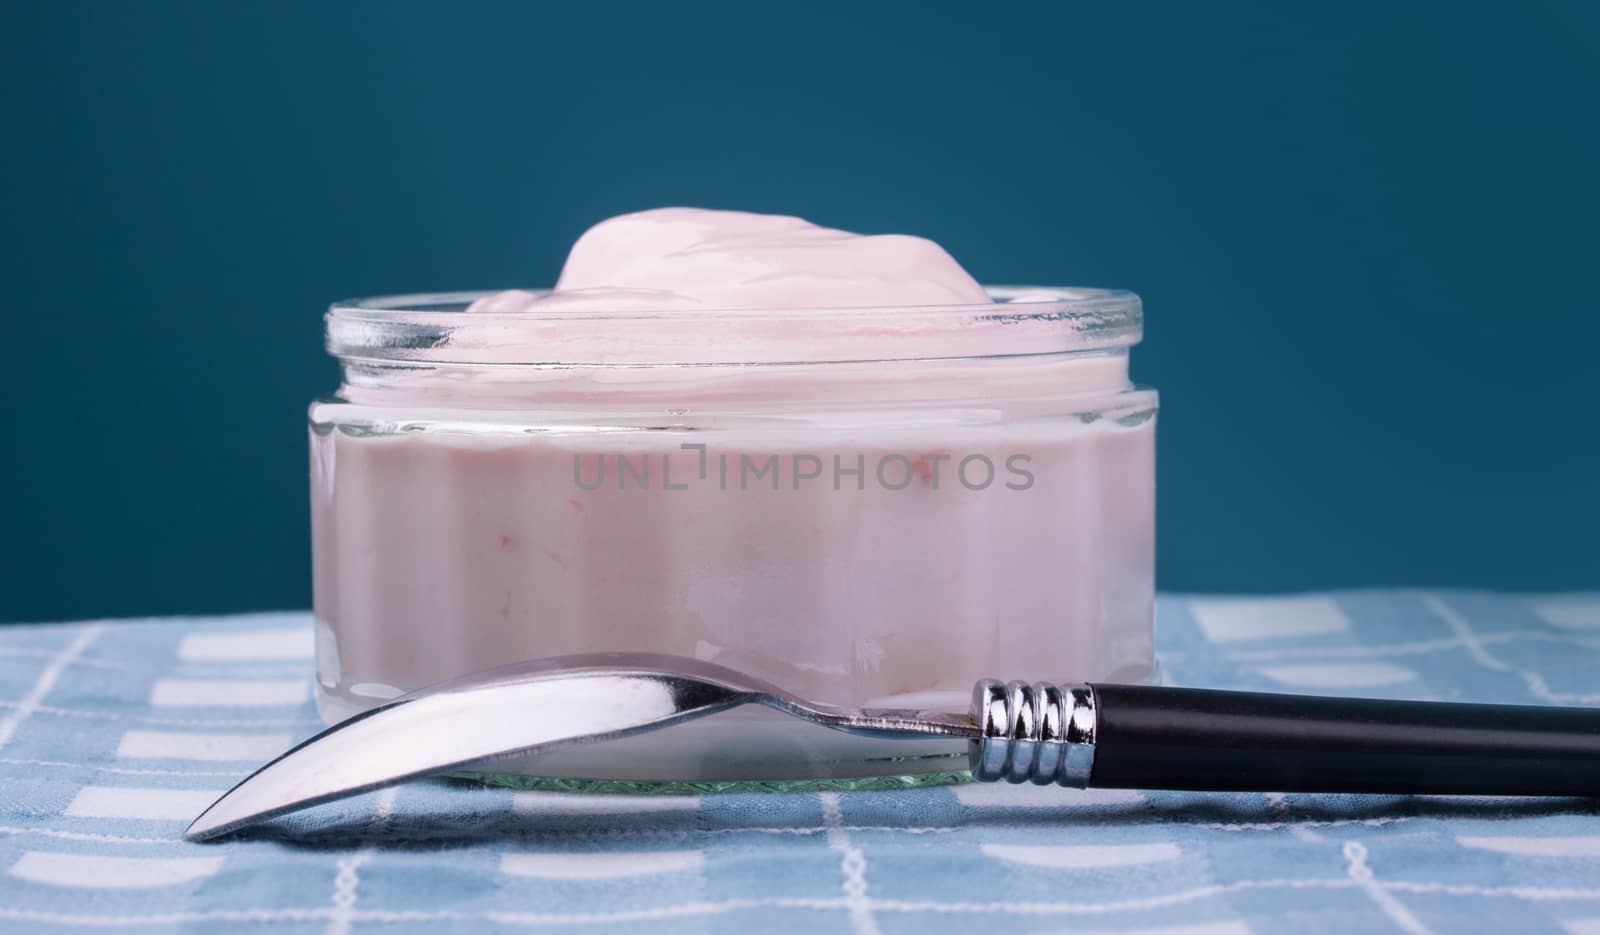 Strawberry yogurt in glass bowl by lanalanglois